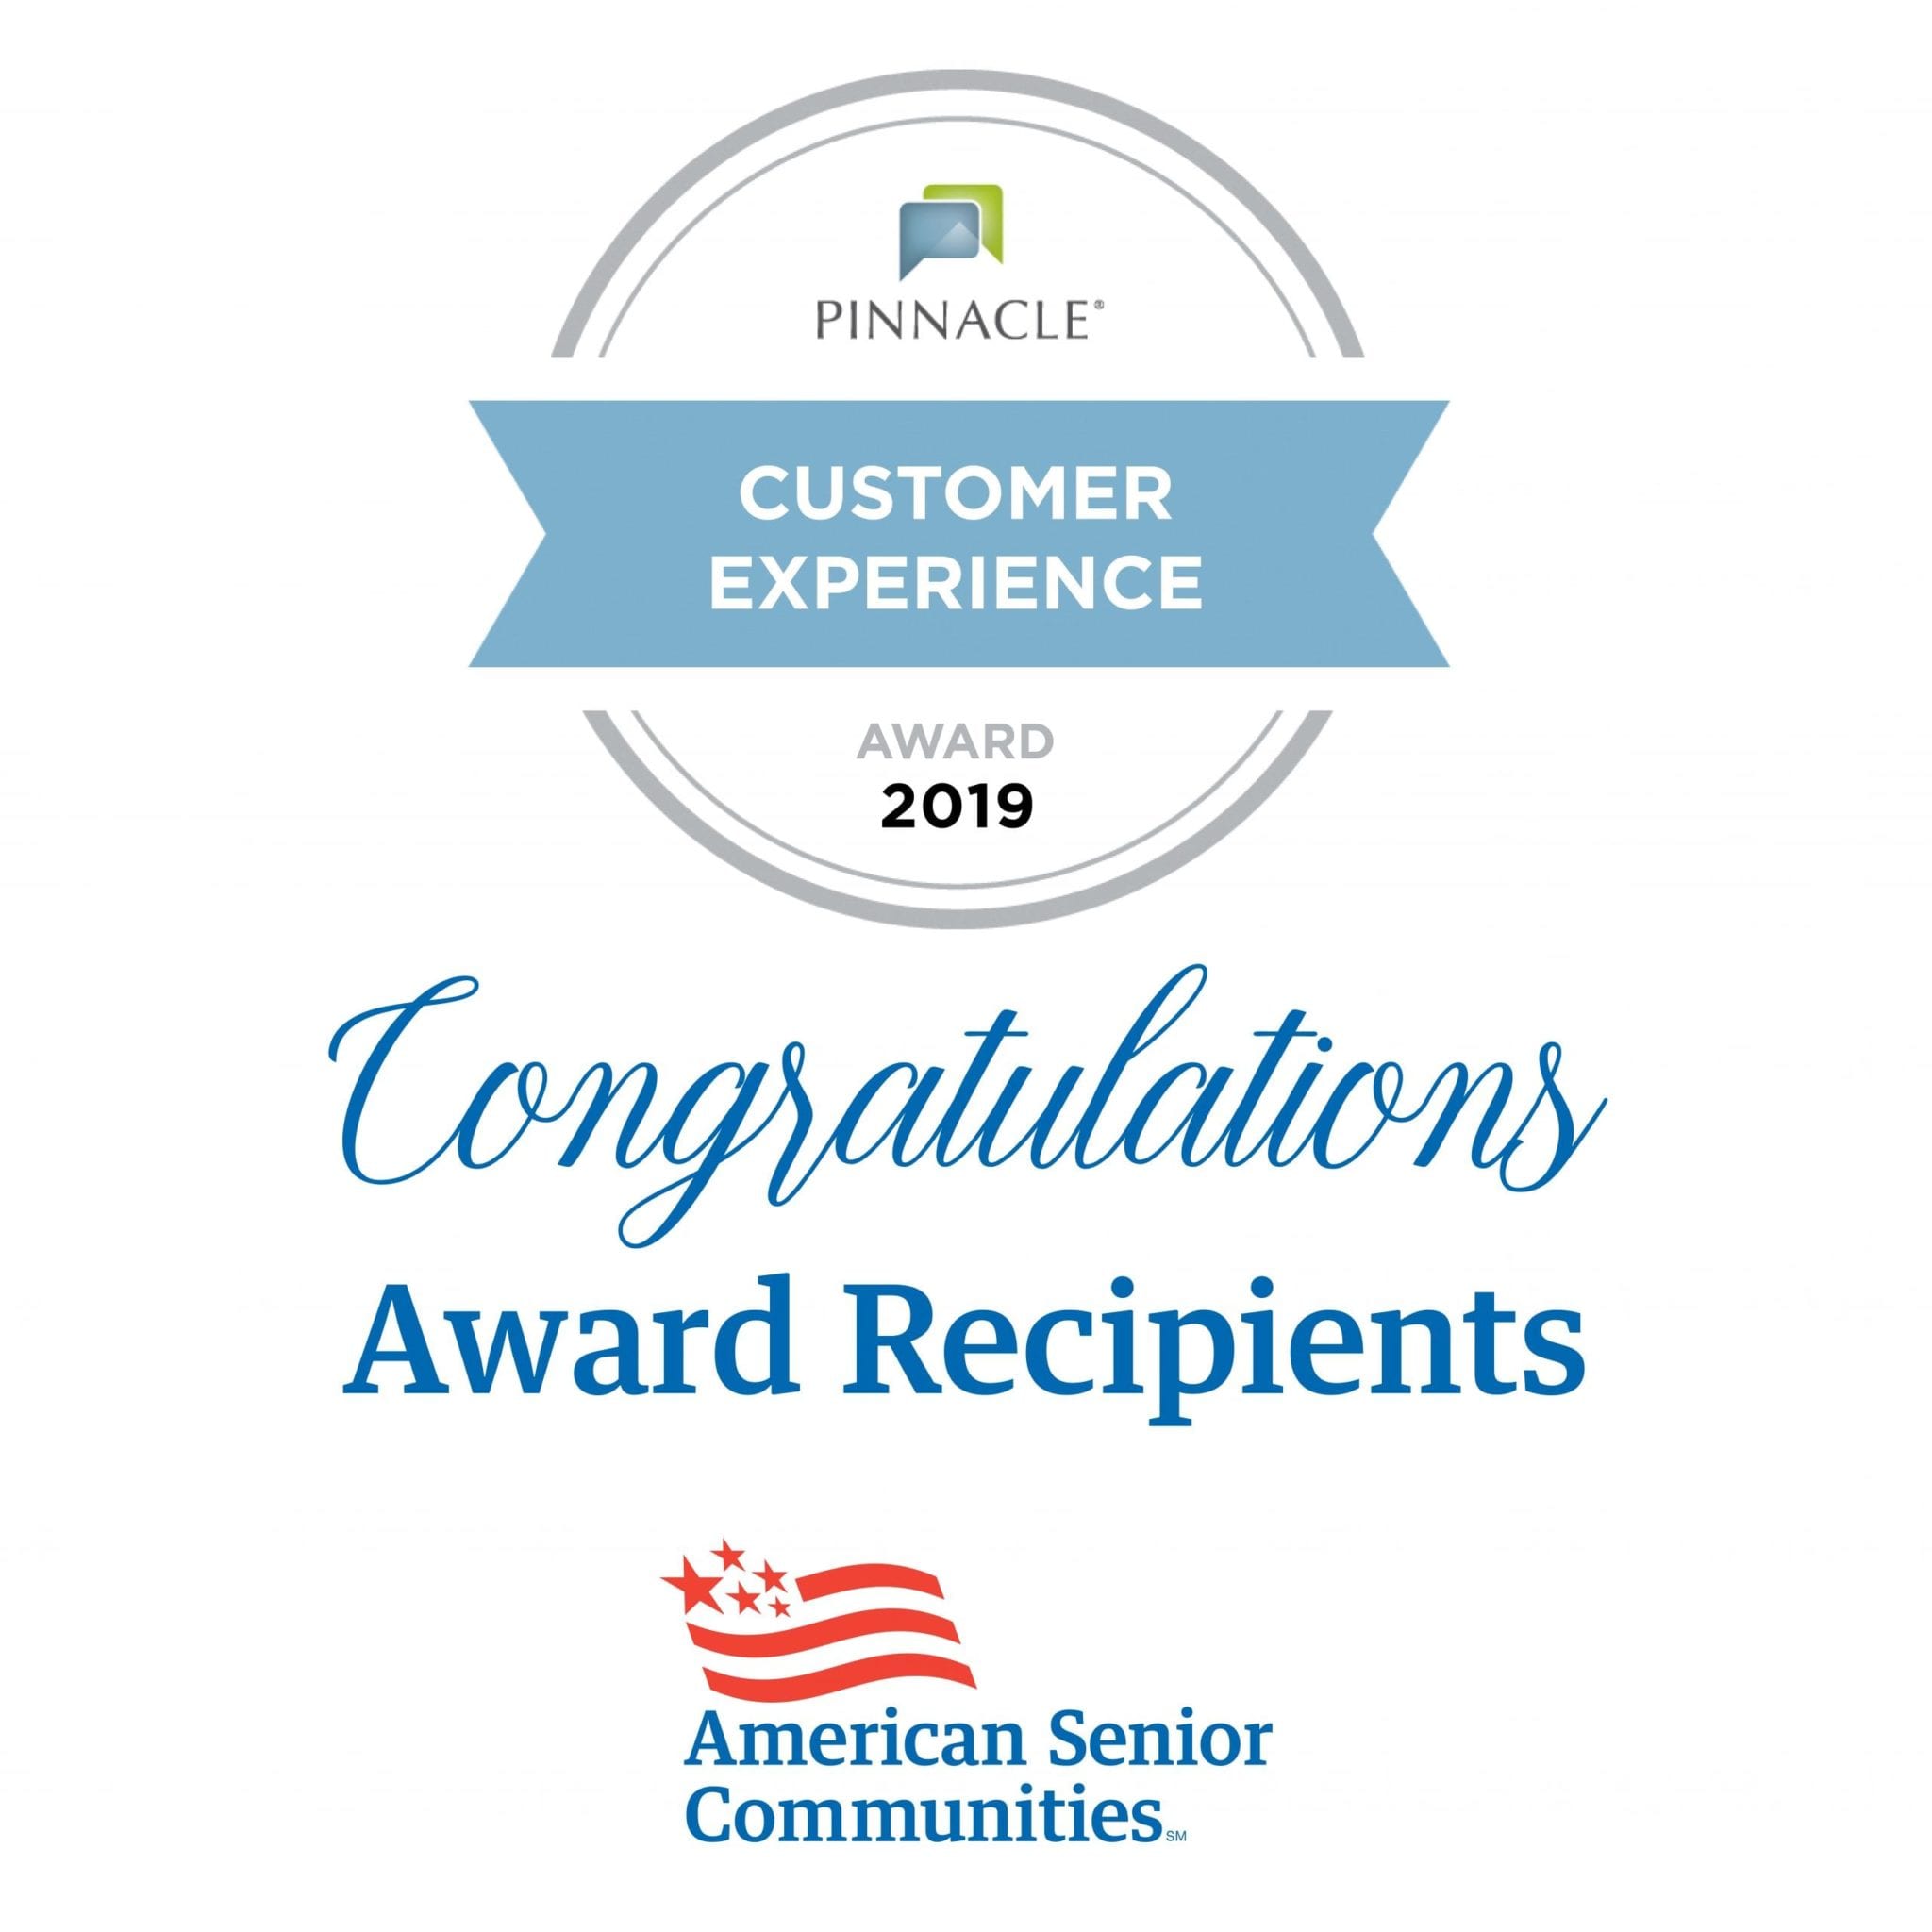 Pinnacle Customer Experience Award 2019